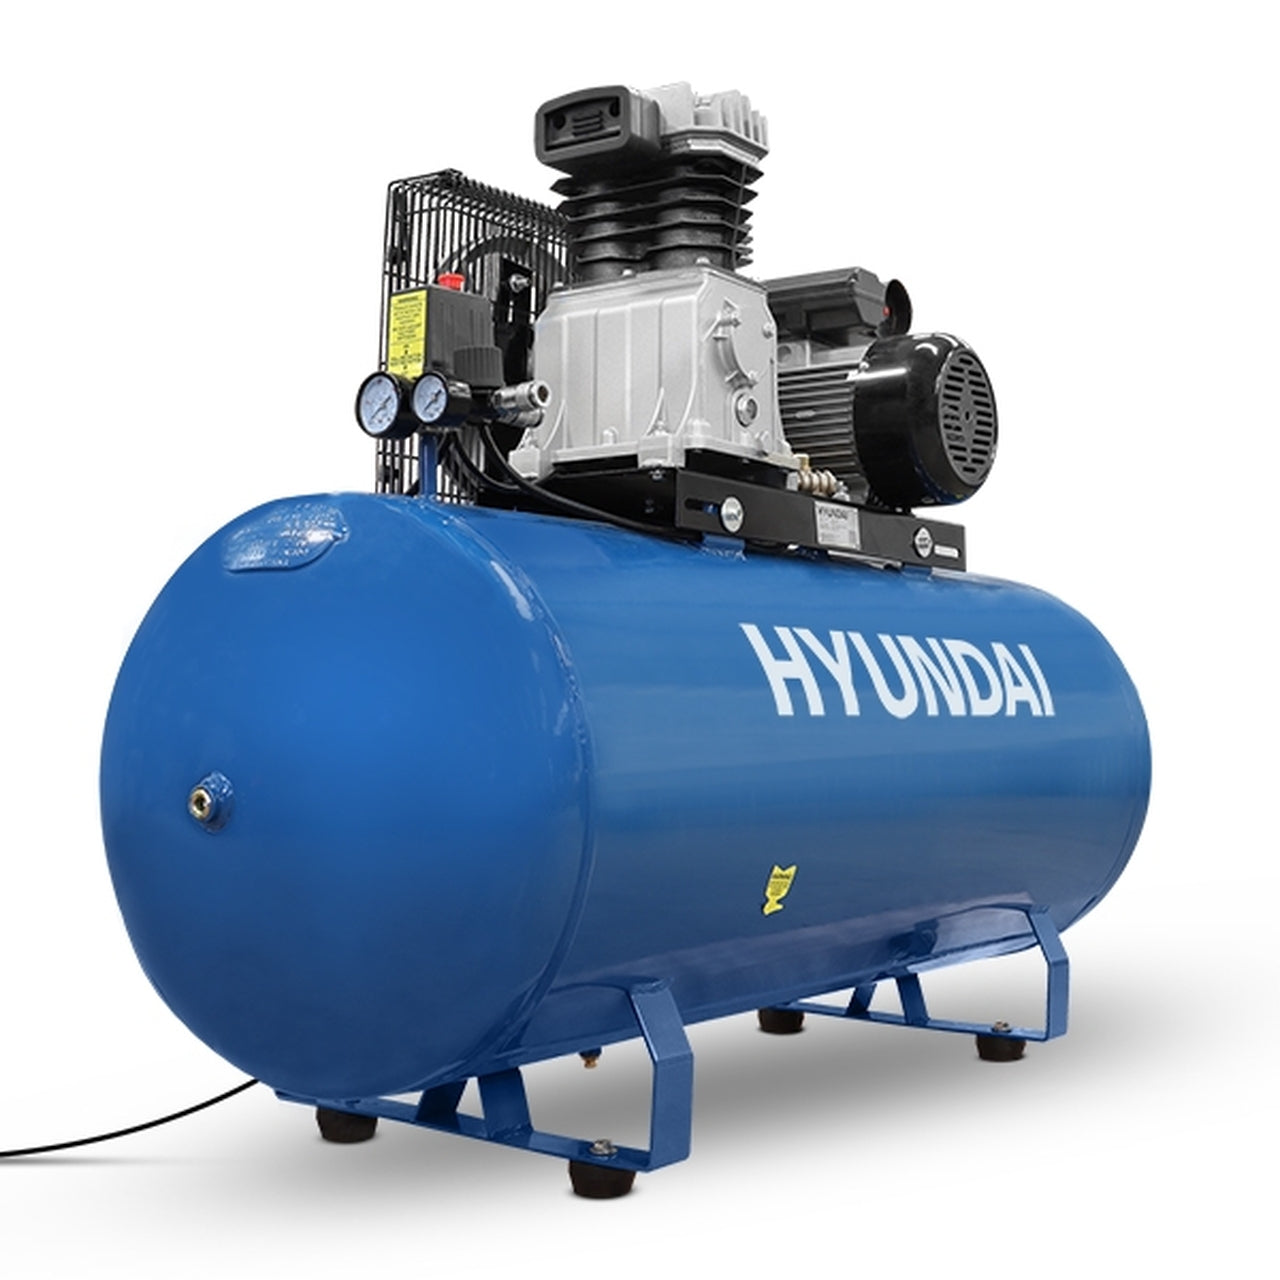 Hyundai-HY3200S-200-Litre-Air-Compressor,-14CFM/145psi,-3hp-